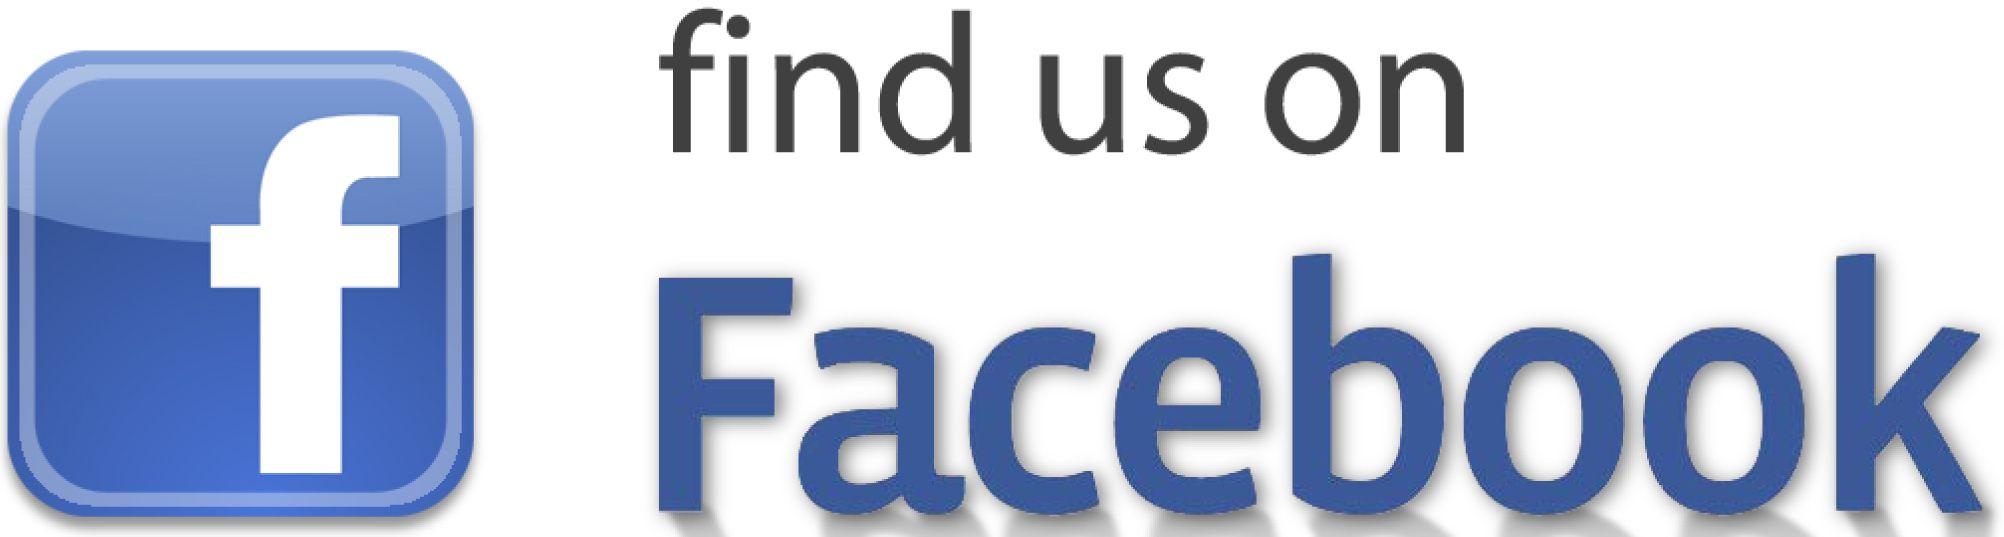 Visit Us On Facebook Logo - ScimitarWeb Discussion - Homepage